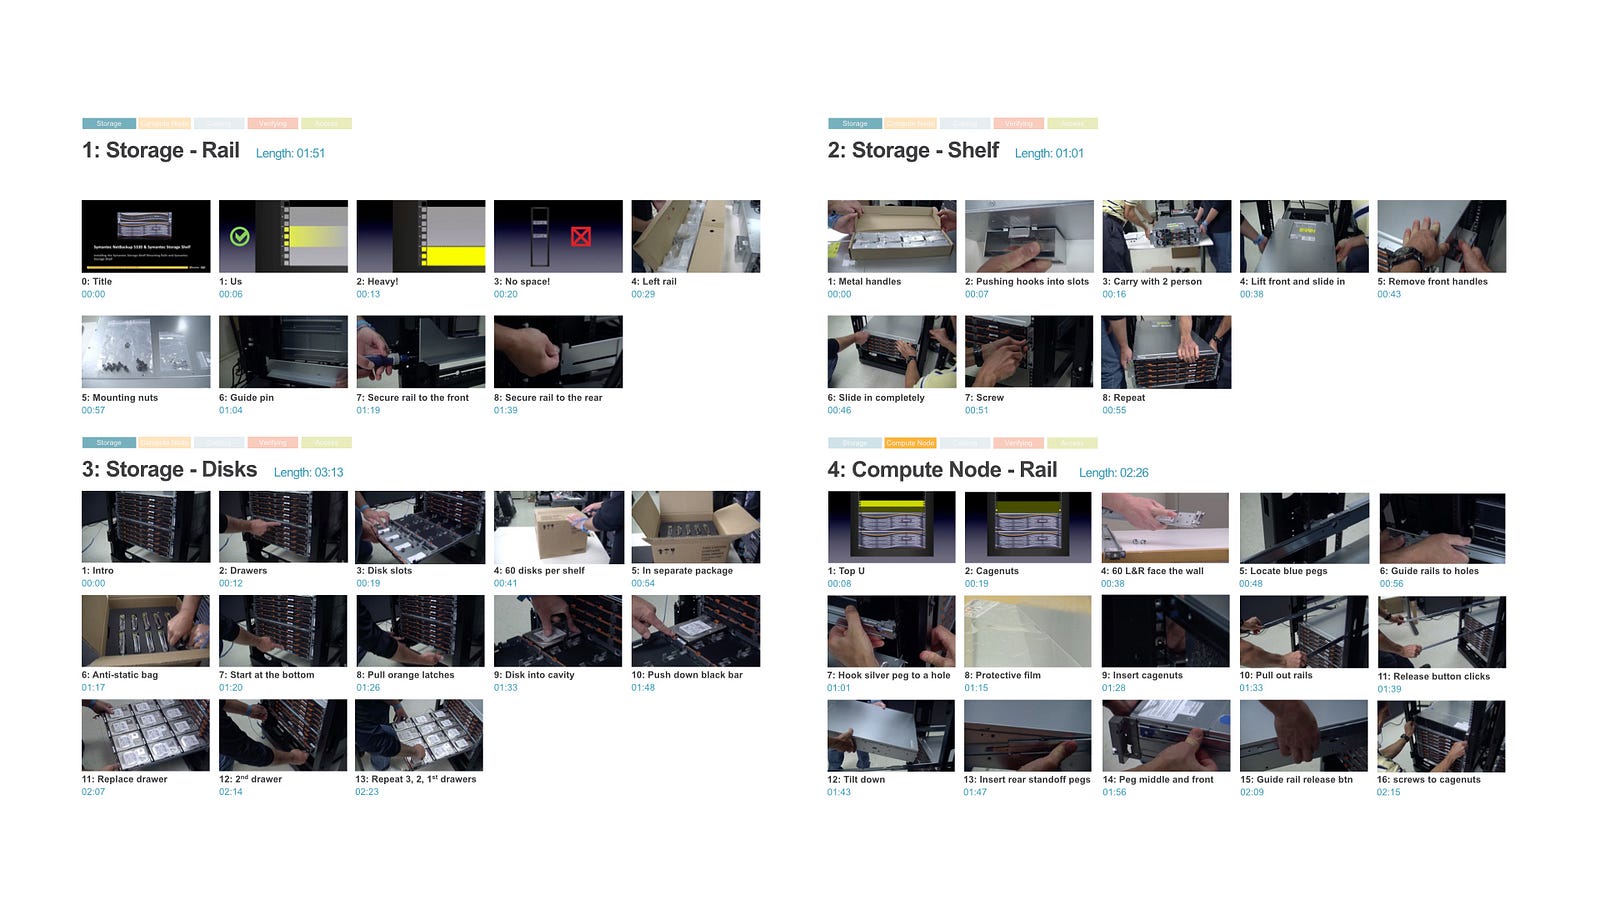 Example of how each video was broken down into micro-scenes.